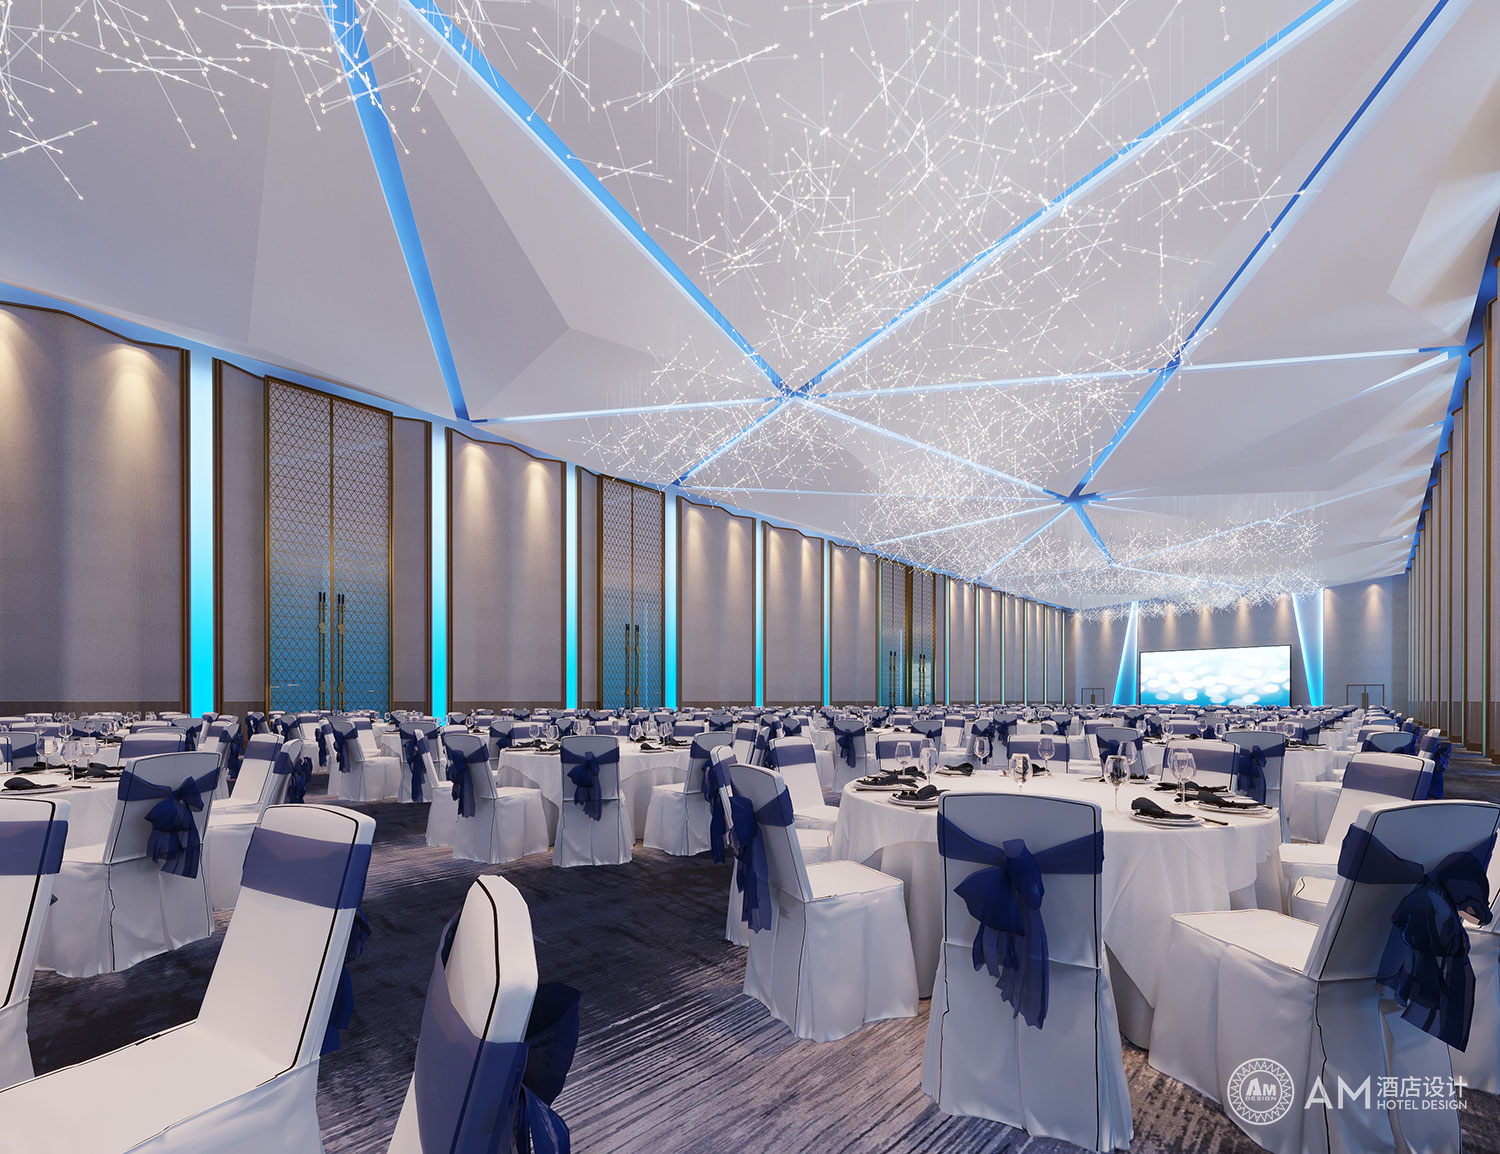 AM DESIGN | Banquet hall design of Huludao million Grand Hotel